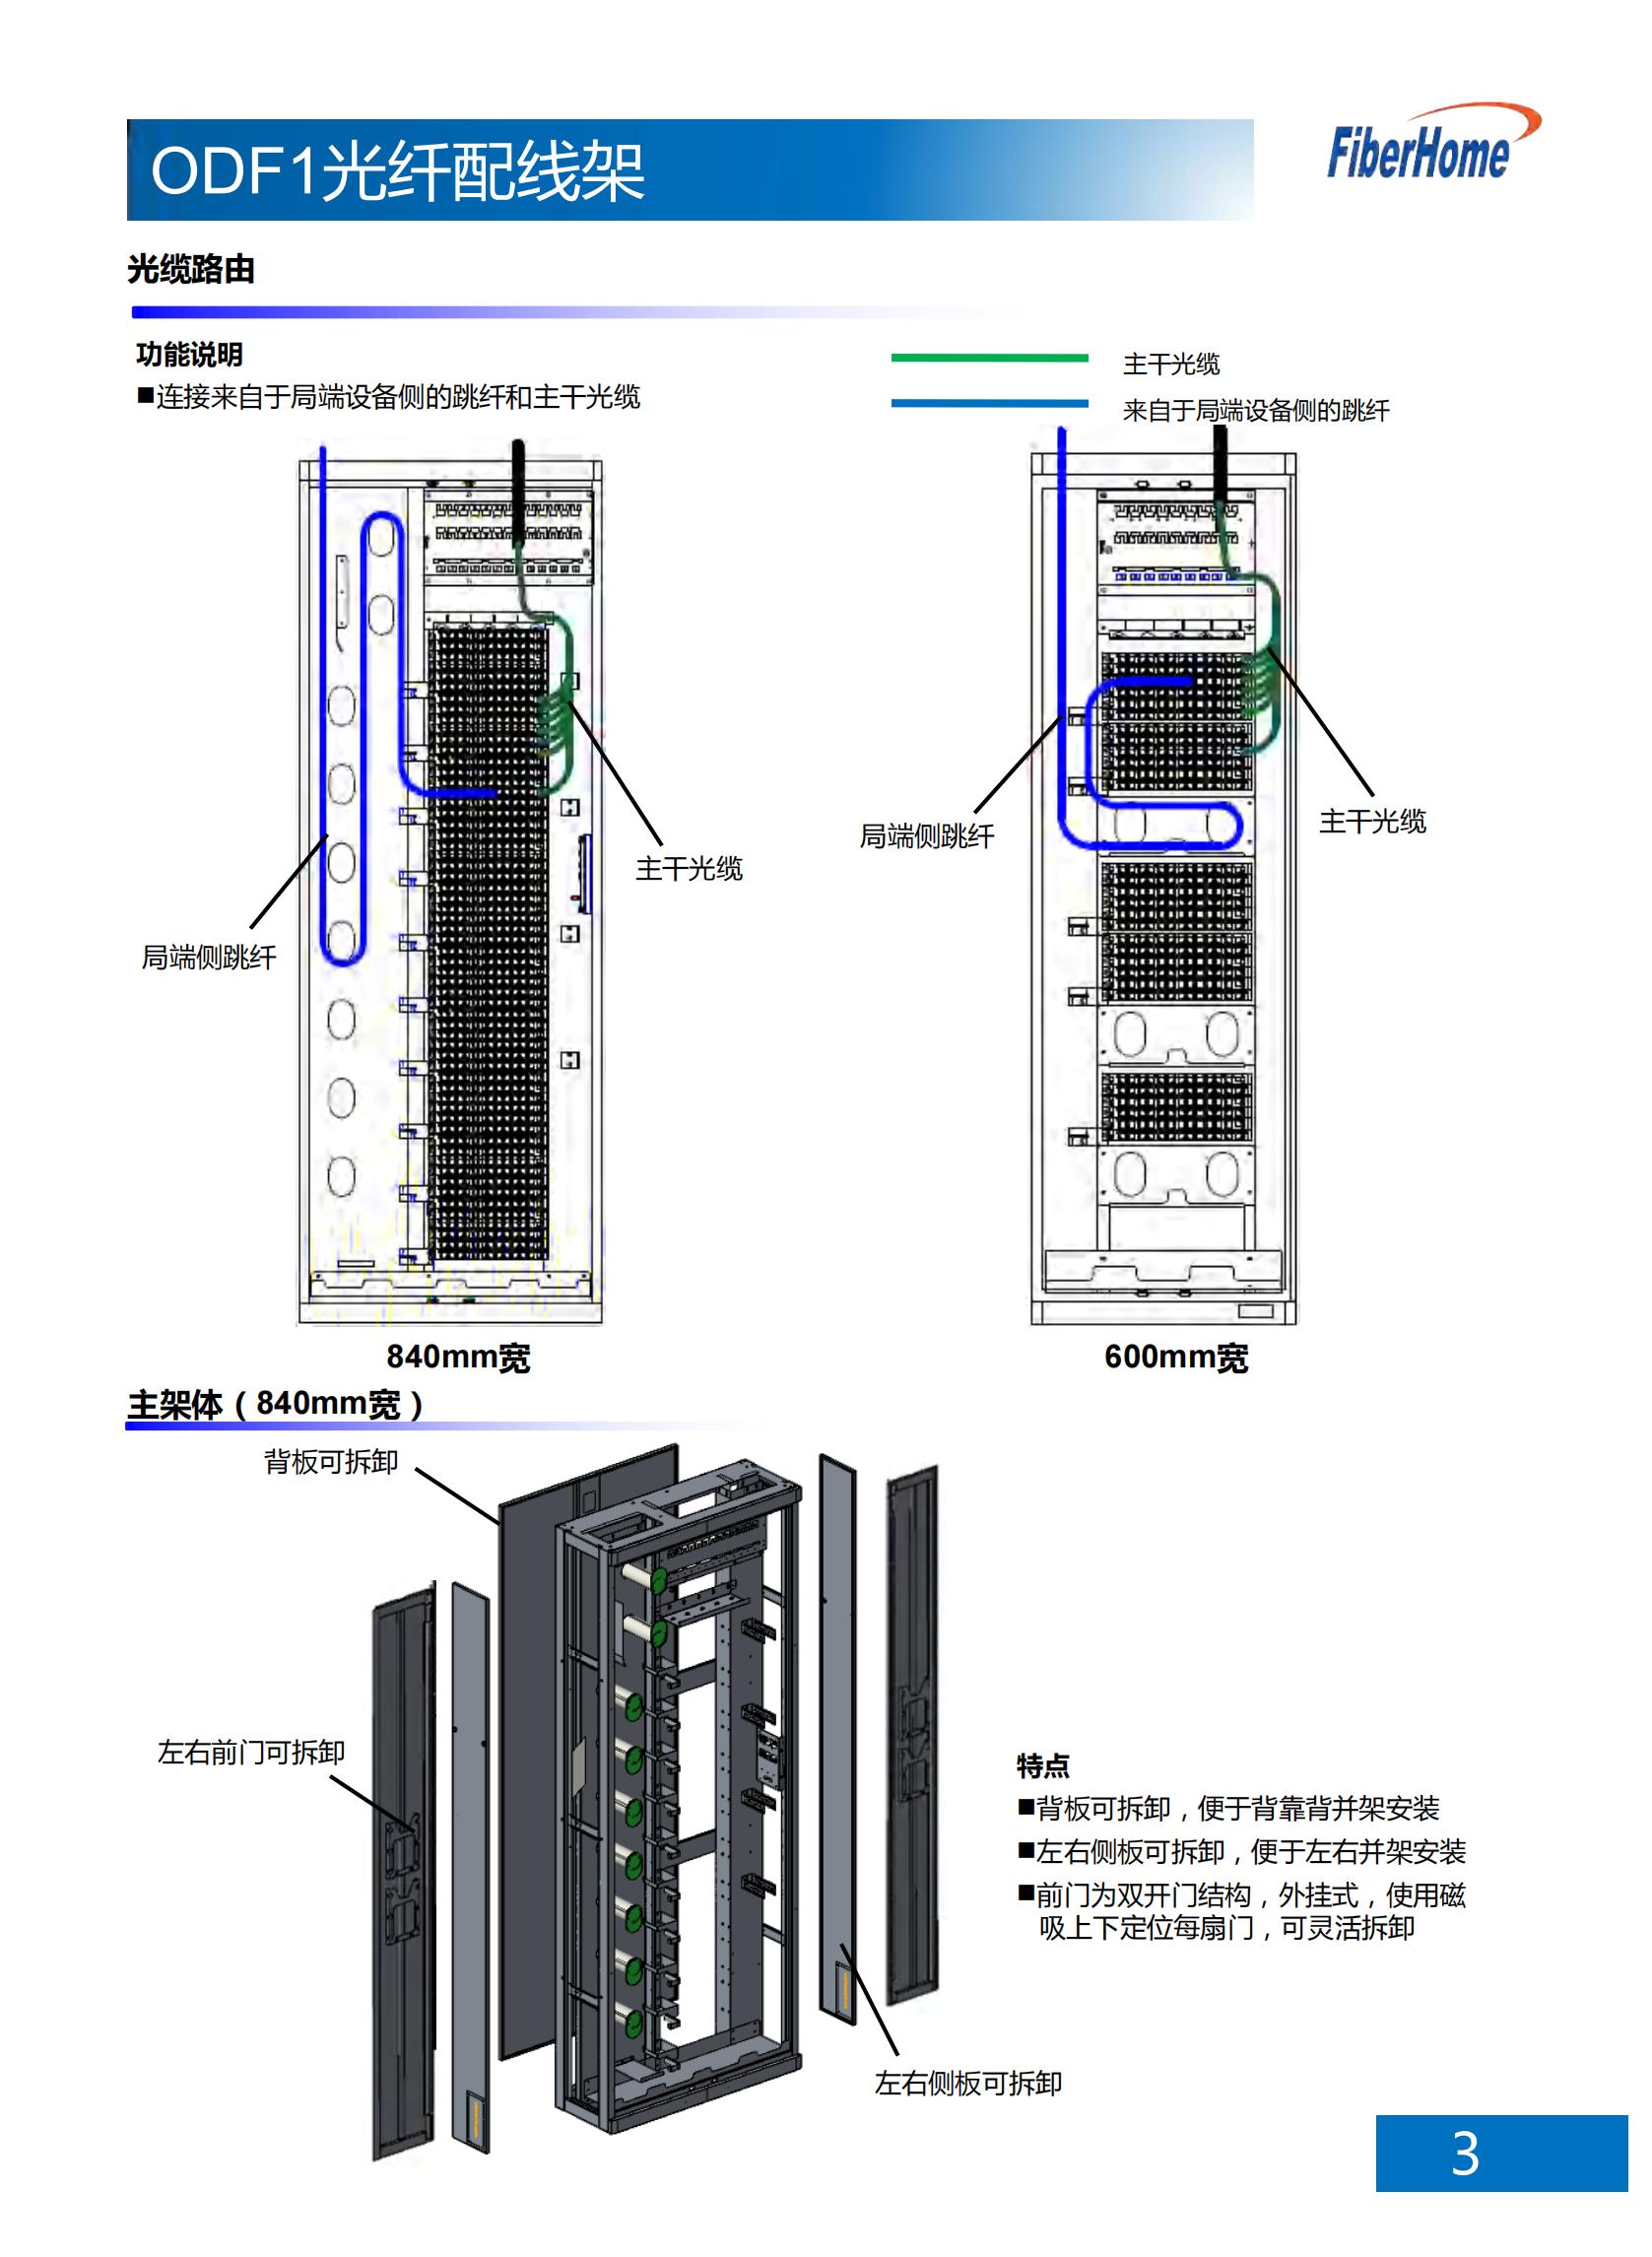 ODF101-576-A4-SC ODF光纤配线架 （576芯落地式 全部含12芯SC熔配一体化单元） 带储纤单元）